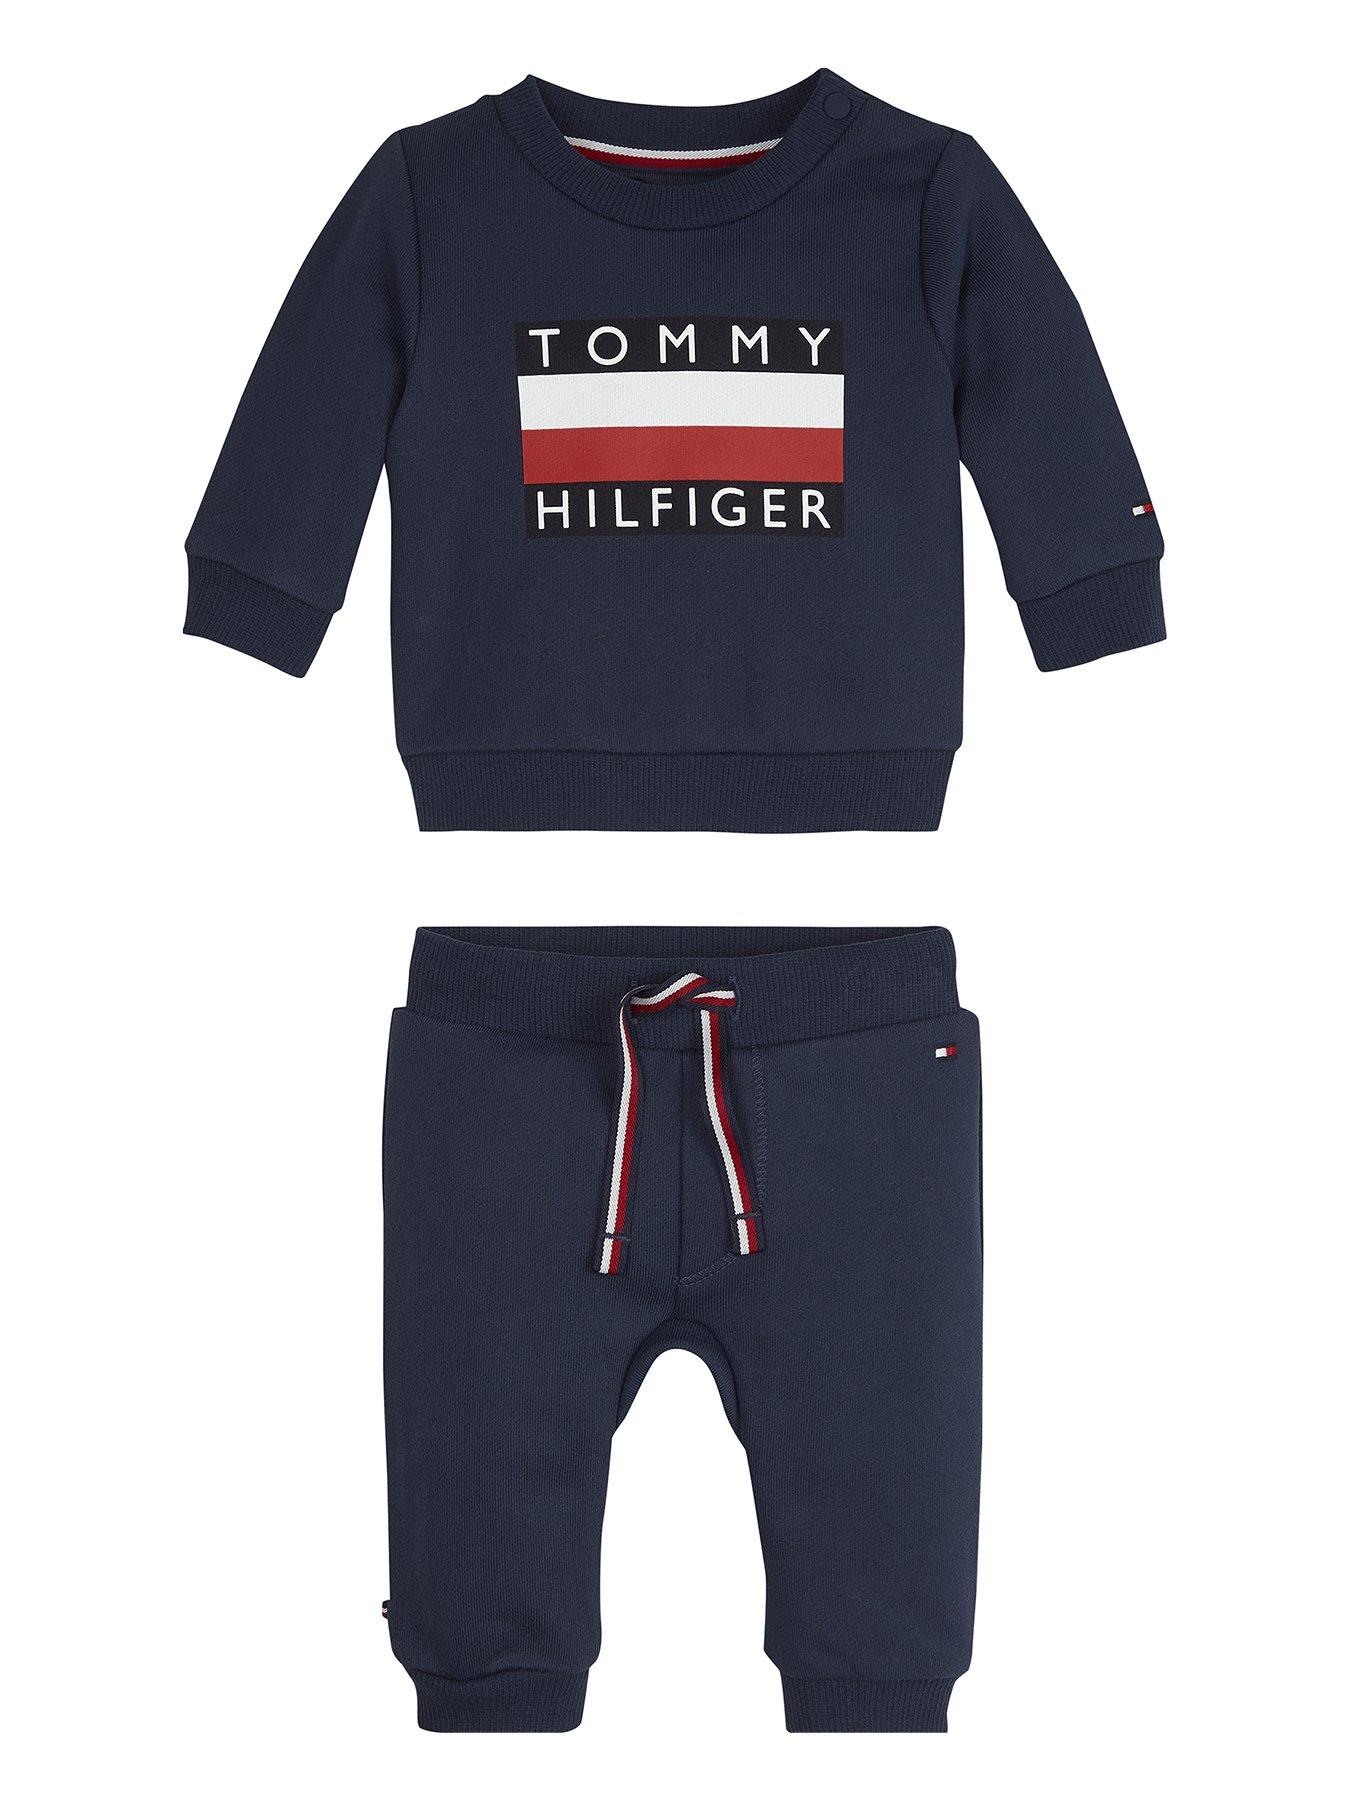 boys tommy hilfiger clothes